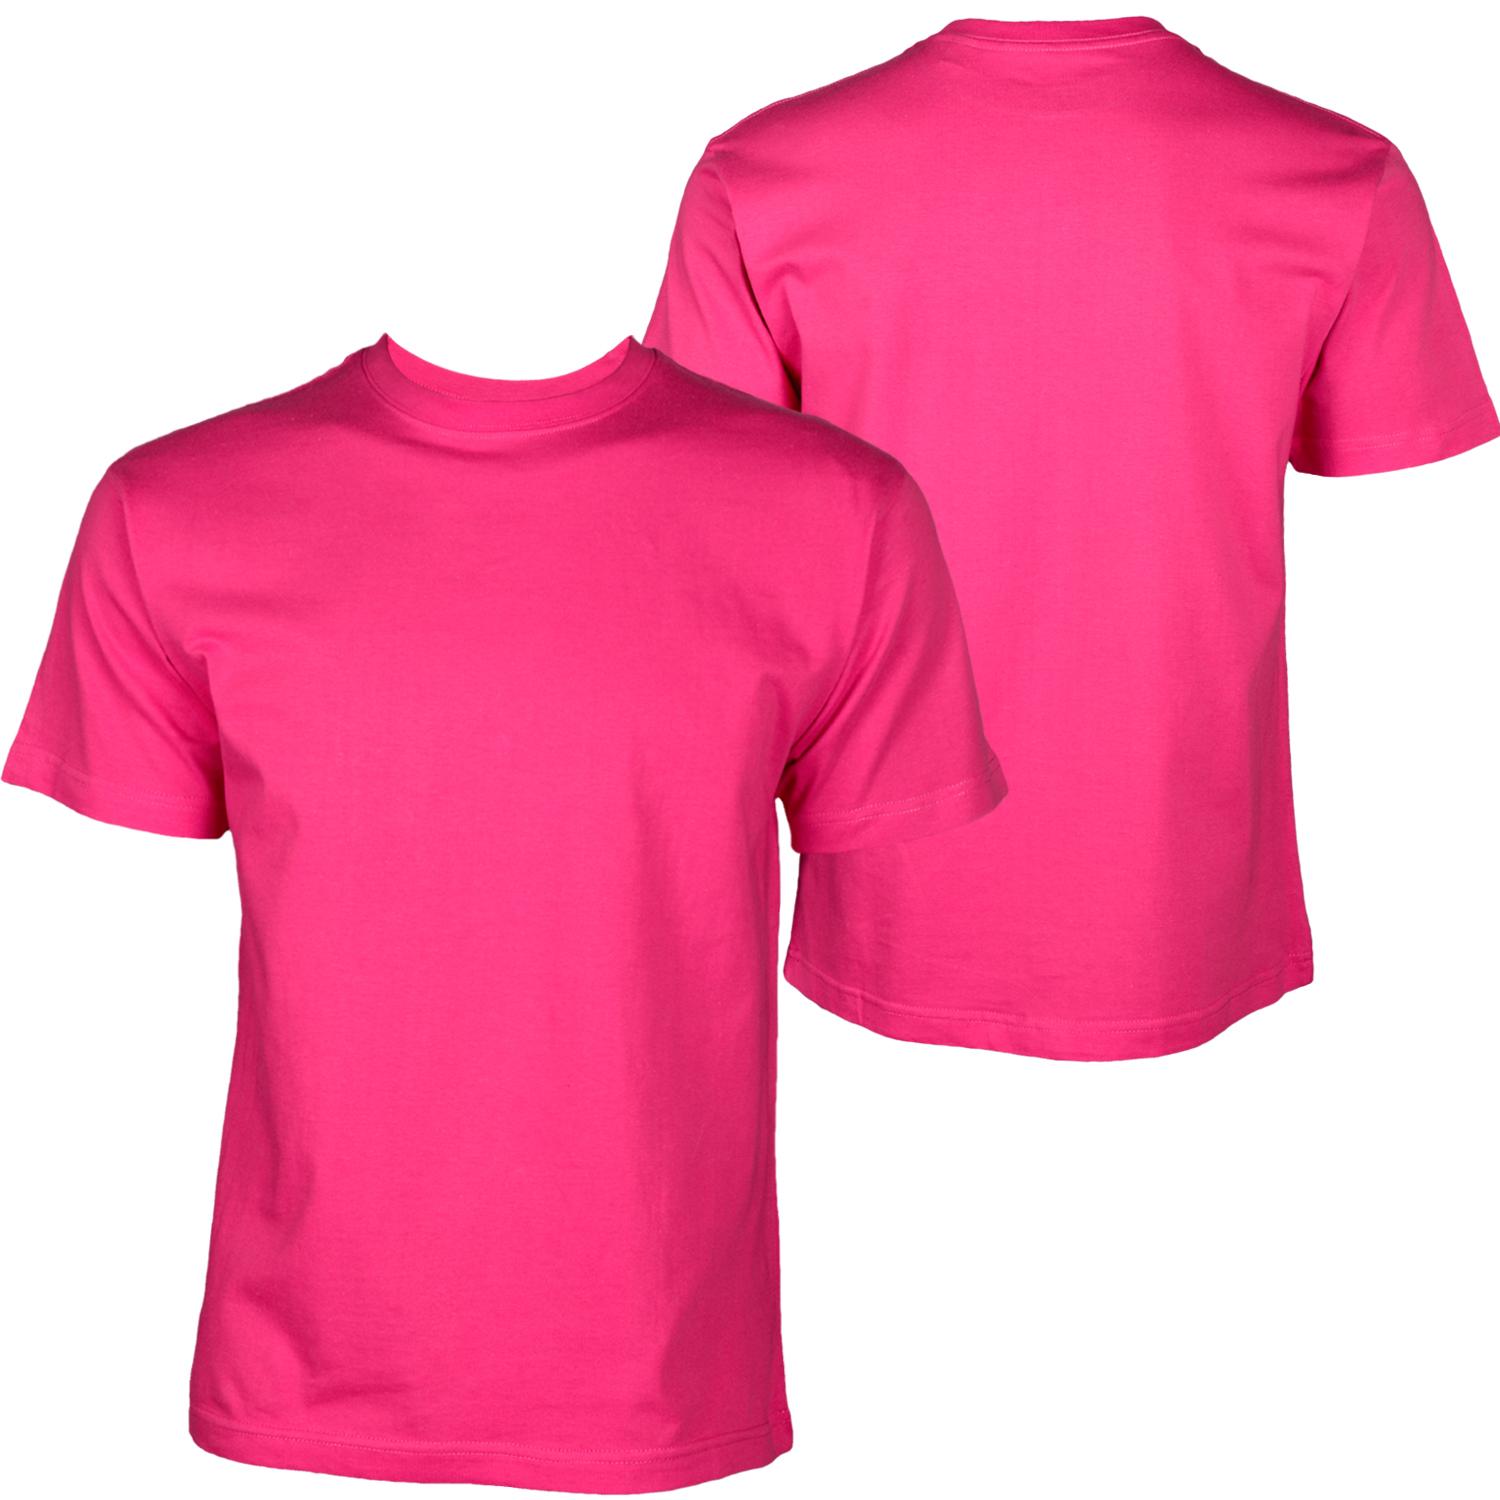 Foto Shmack Shmack Shmack Basic Blank T-shirt Pink Pink Camisetas Rosa foto 232652